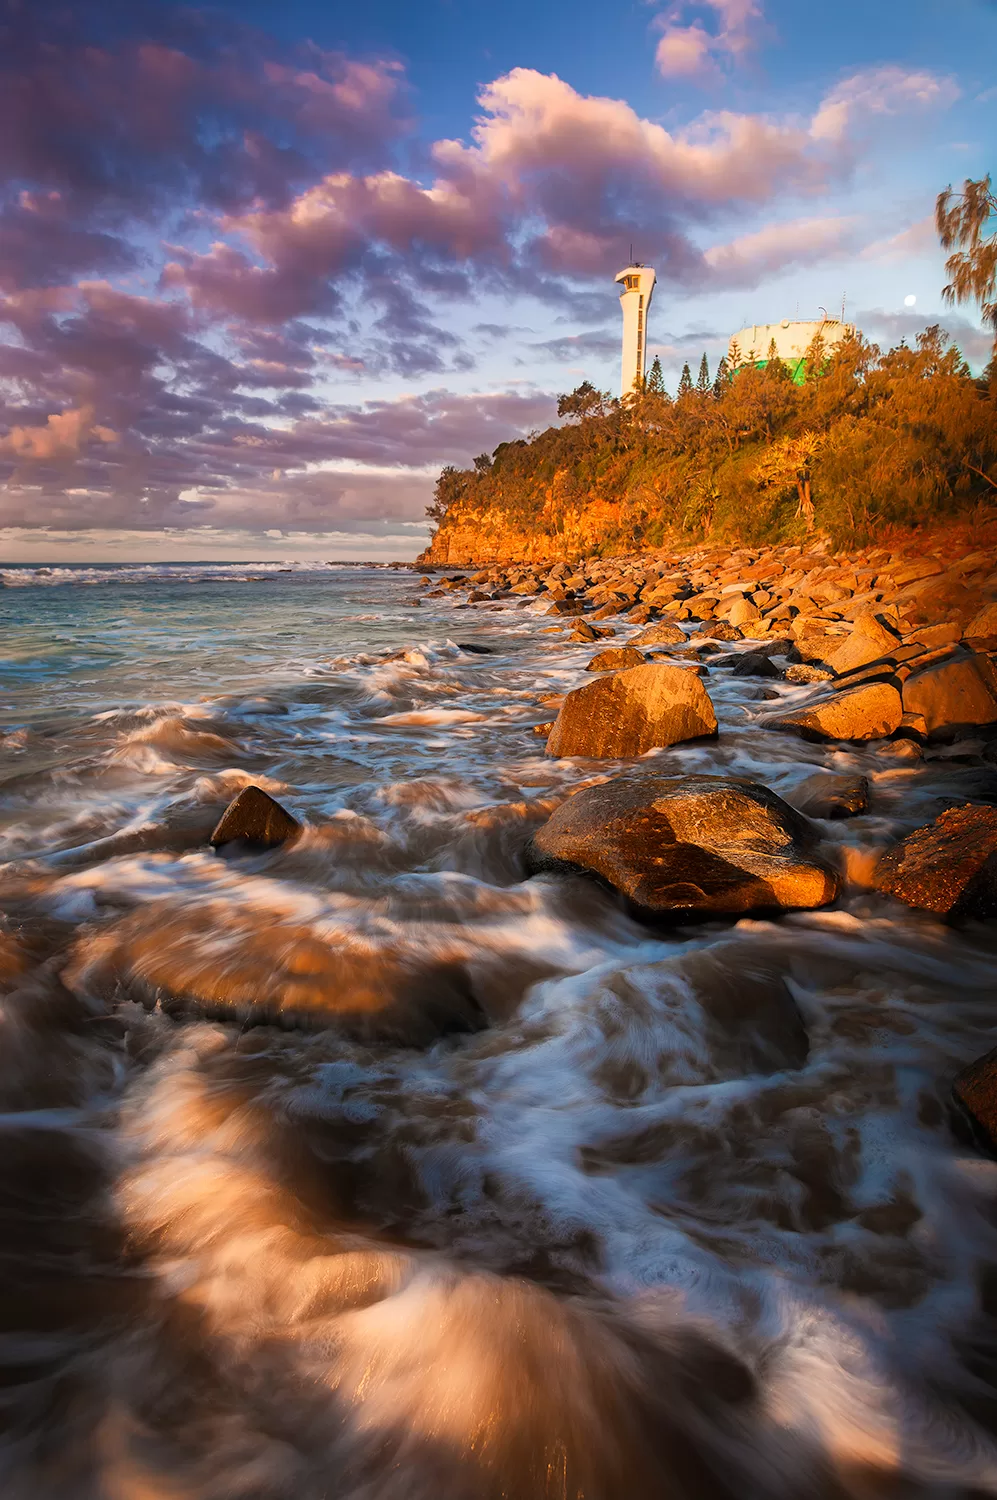 Sunset at Point Cartwright Lighthouse, Sunshine Coast - a popular spot for landscape photography